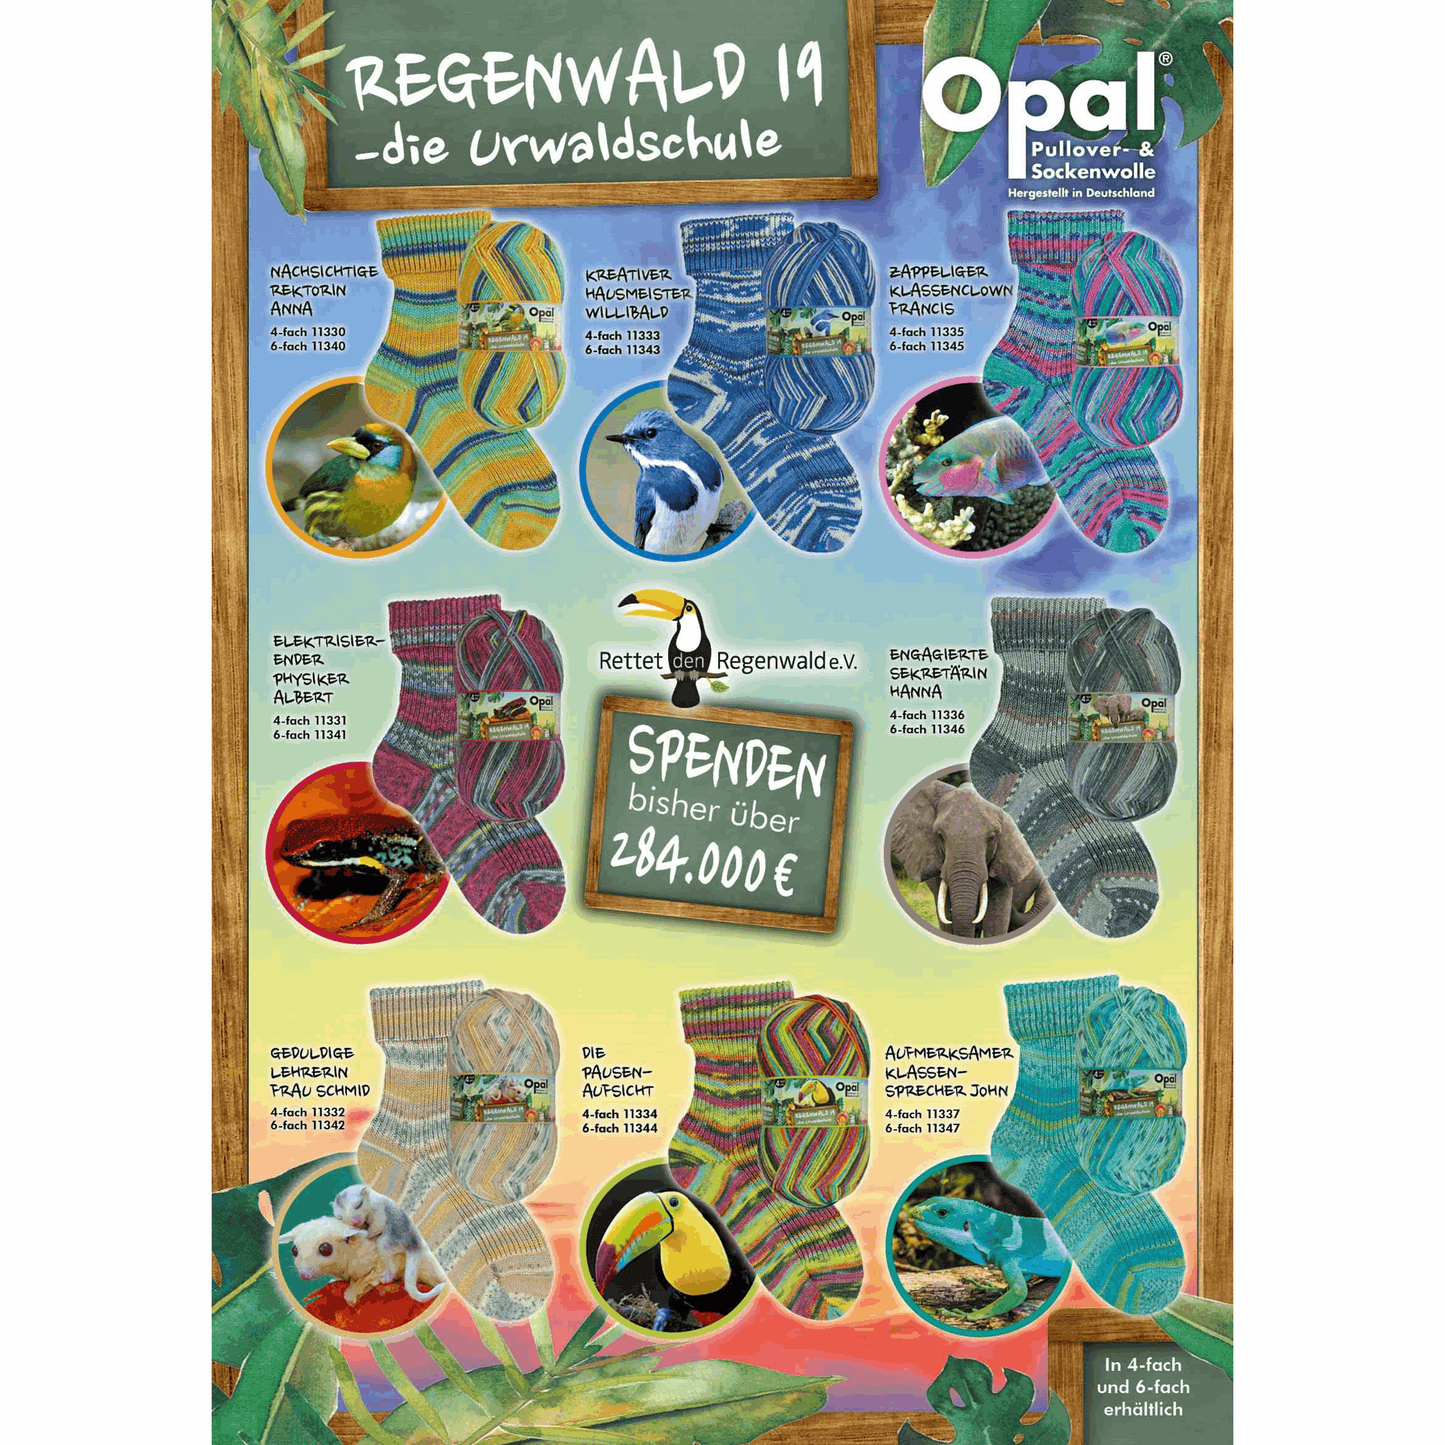 Opal Rainforest 19 4-ply 100g, 97754, color creative caretaker Willibald 1333